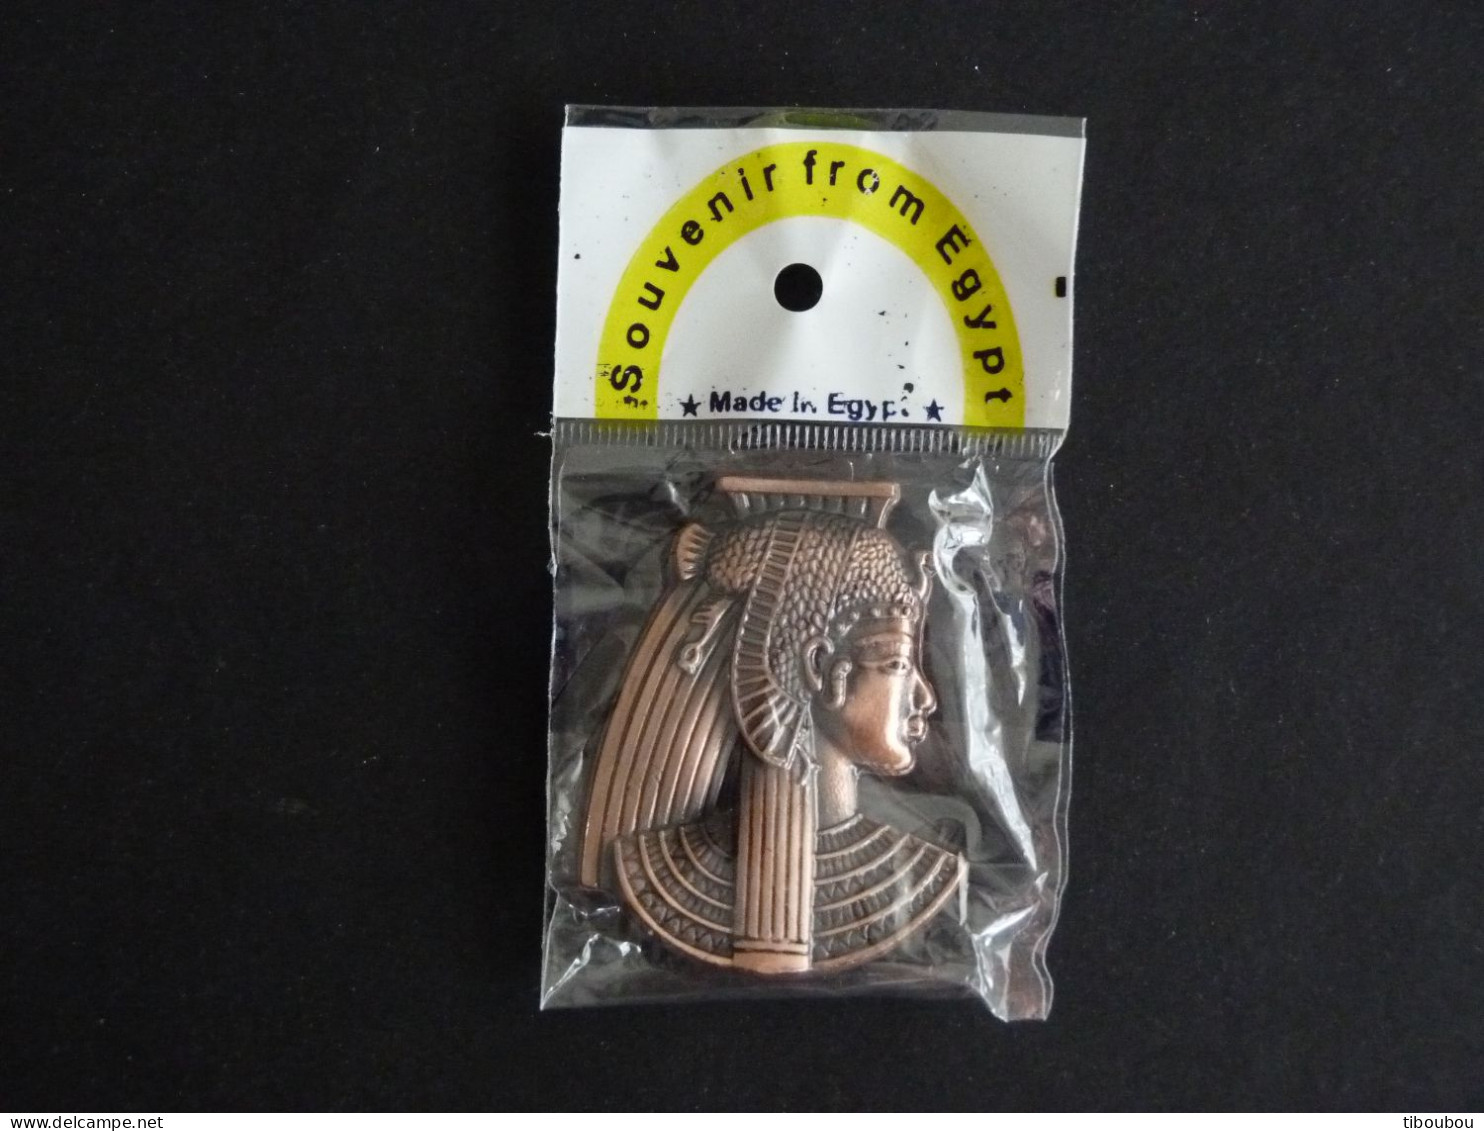 MAGNET EN METAL SOUVENIR FROM EGYPT EGYPTE SOUS BLISTER - CLEOPATRE NEFERTITI - Tourism